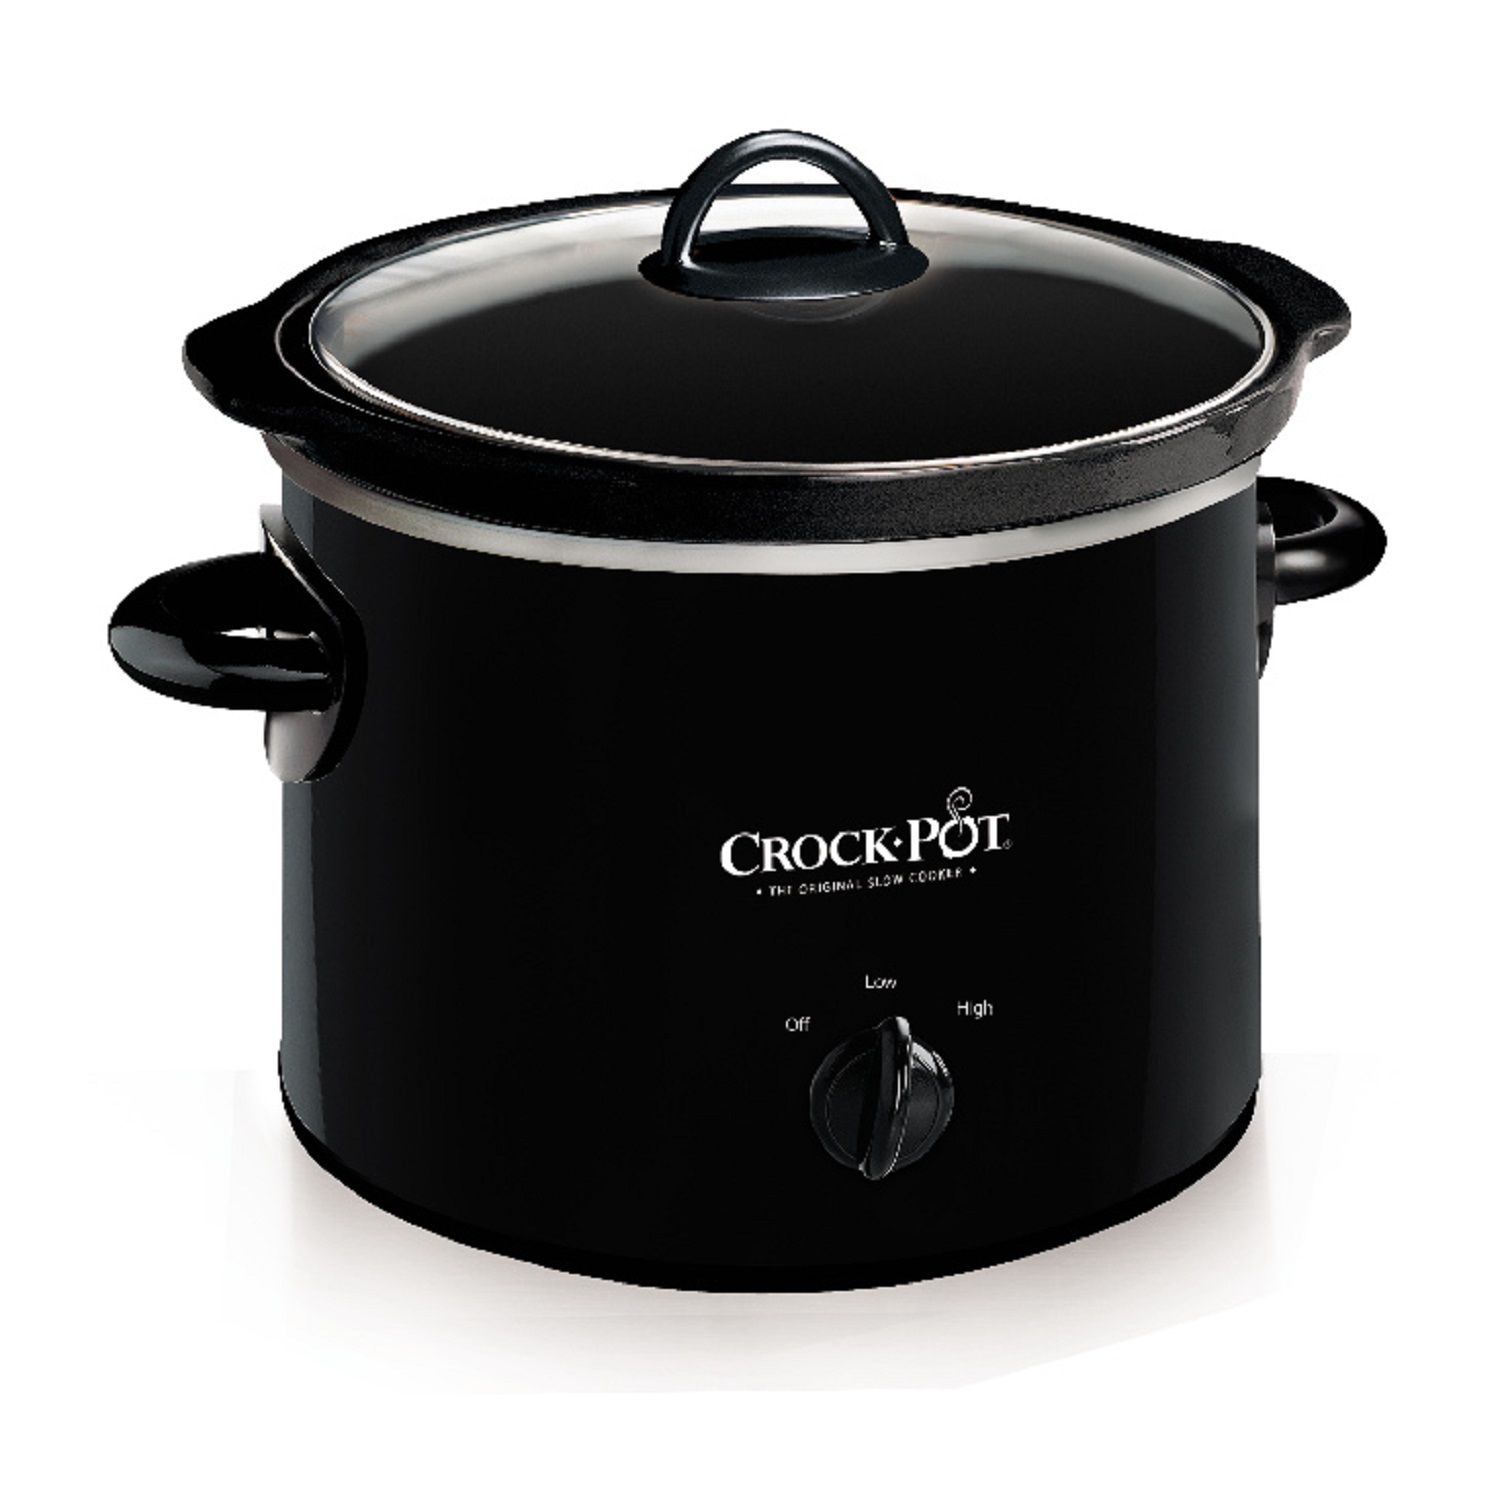 crock-pot slow cooker